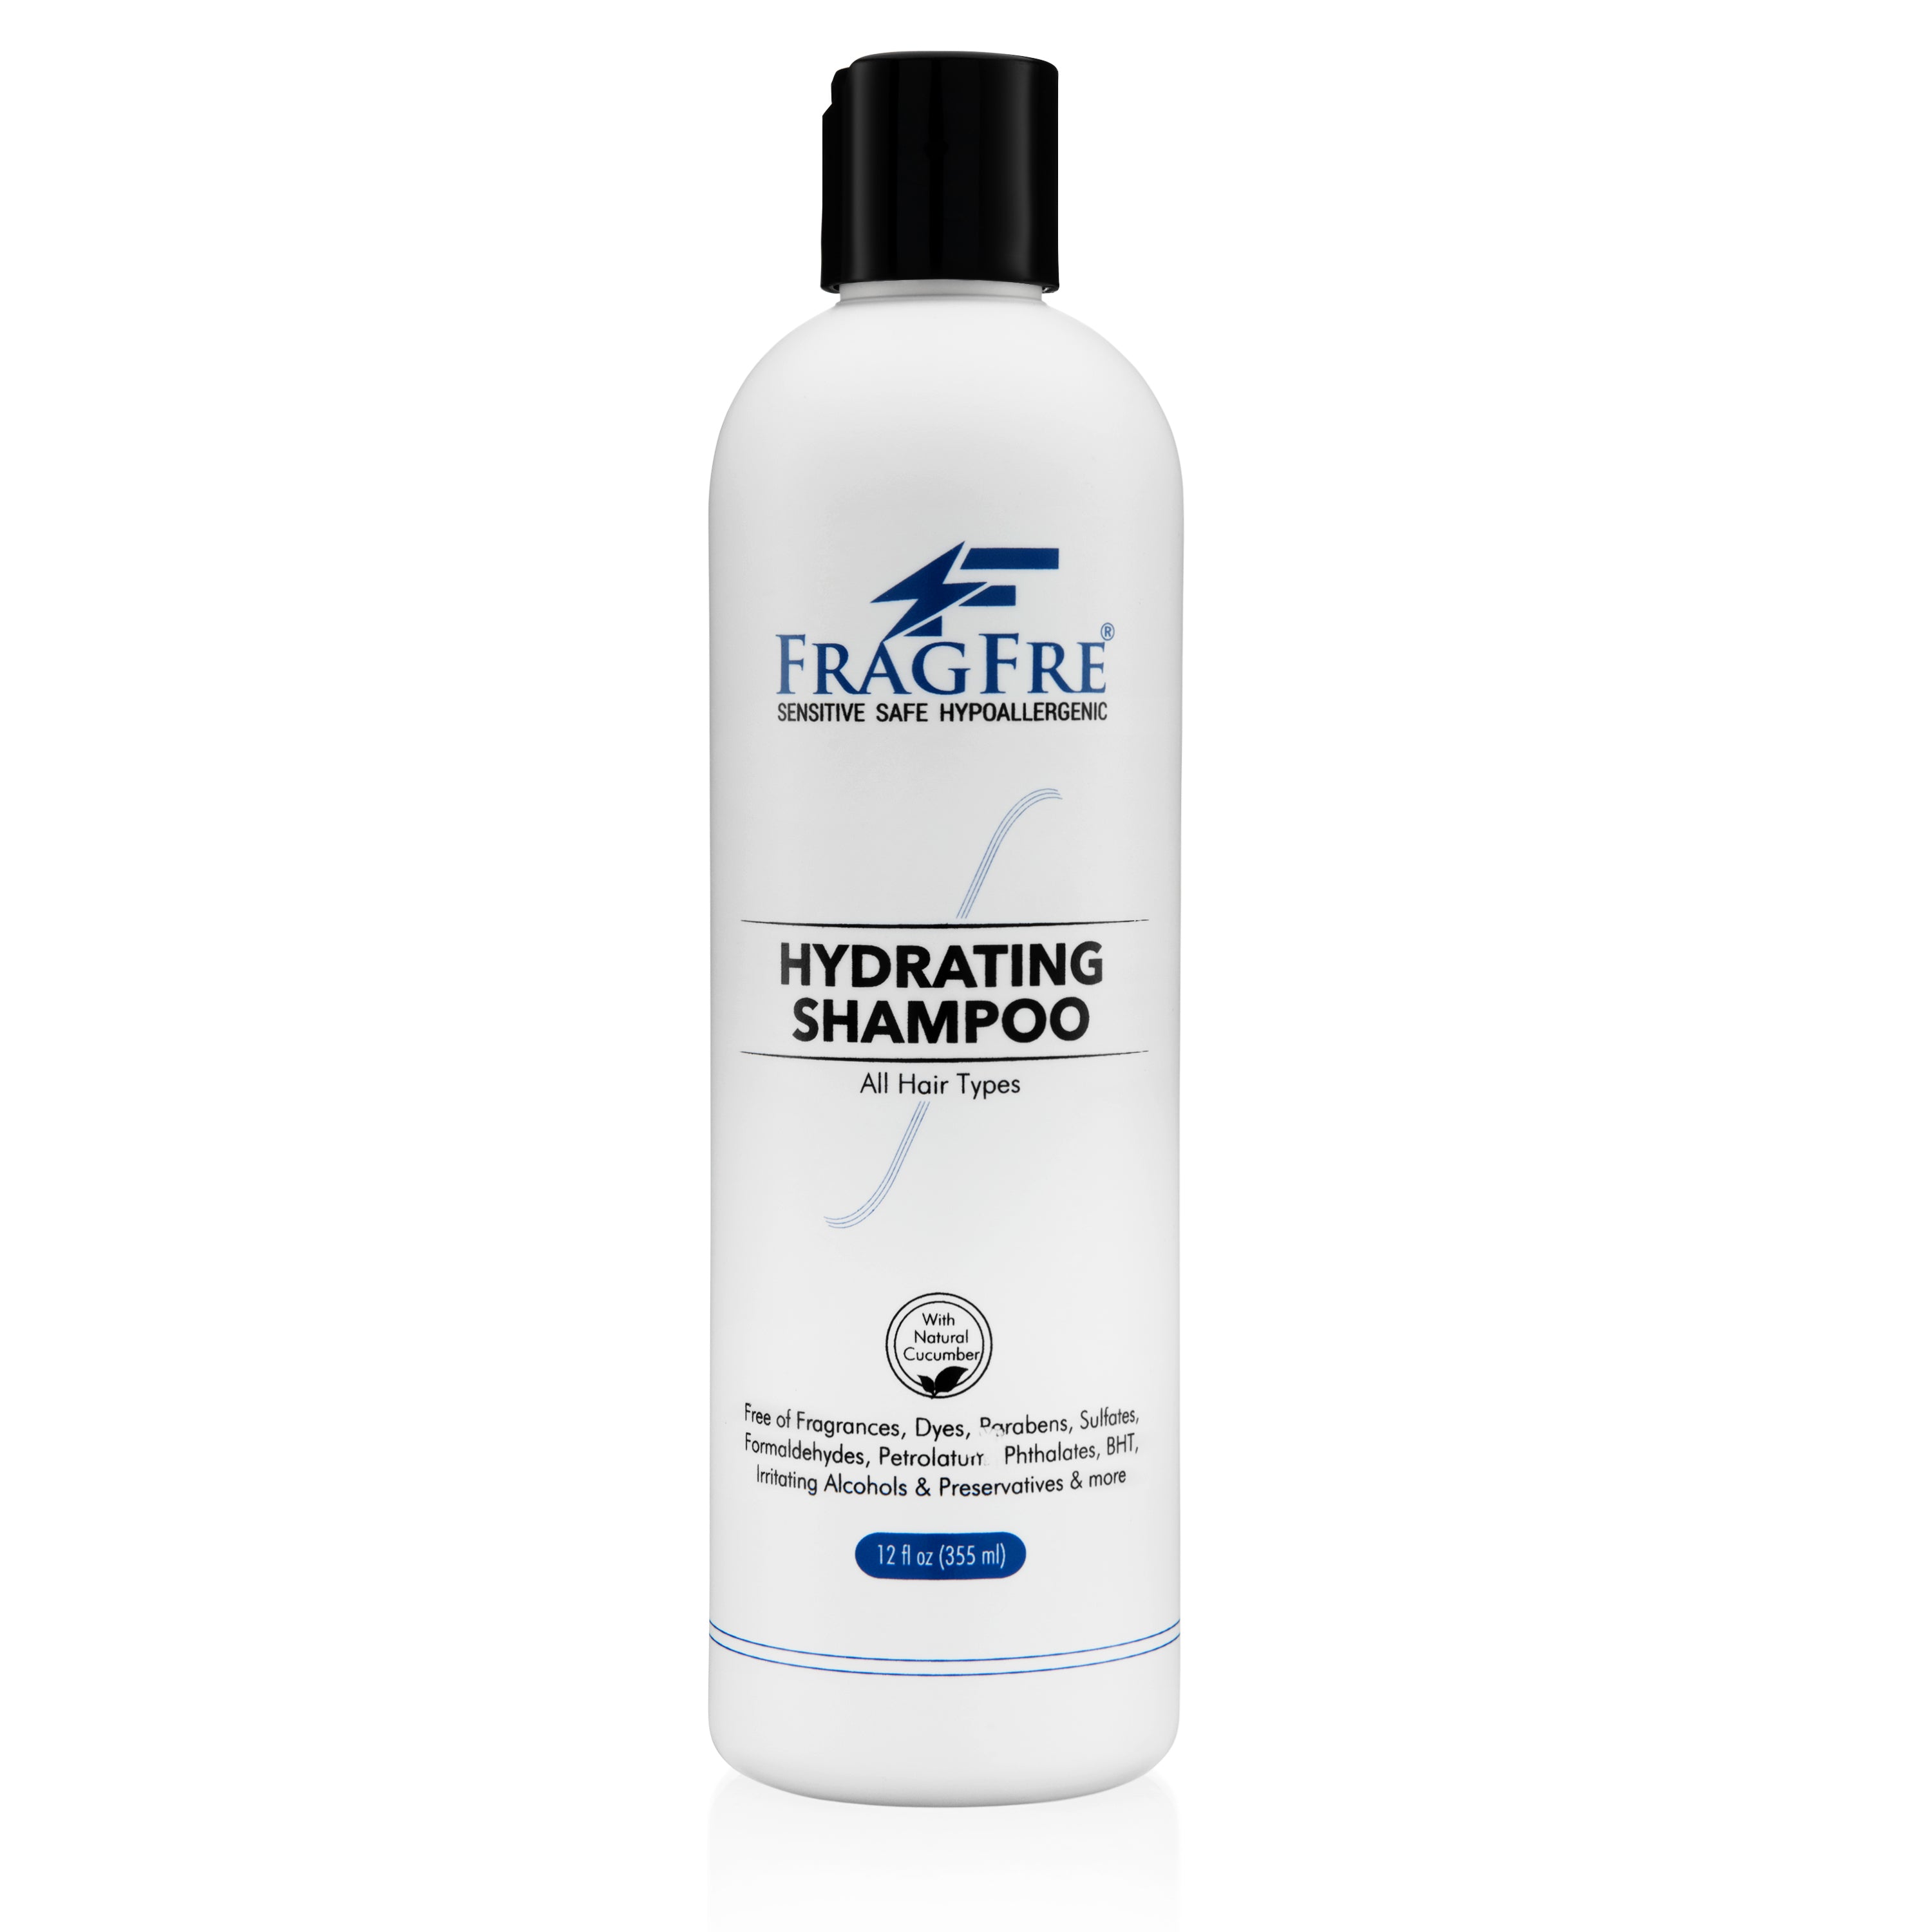 FRAGFRE Hydrating Shampoo 12oz - Hypoallergenic Sulfate Free Sha